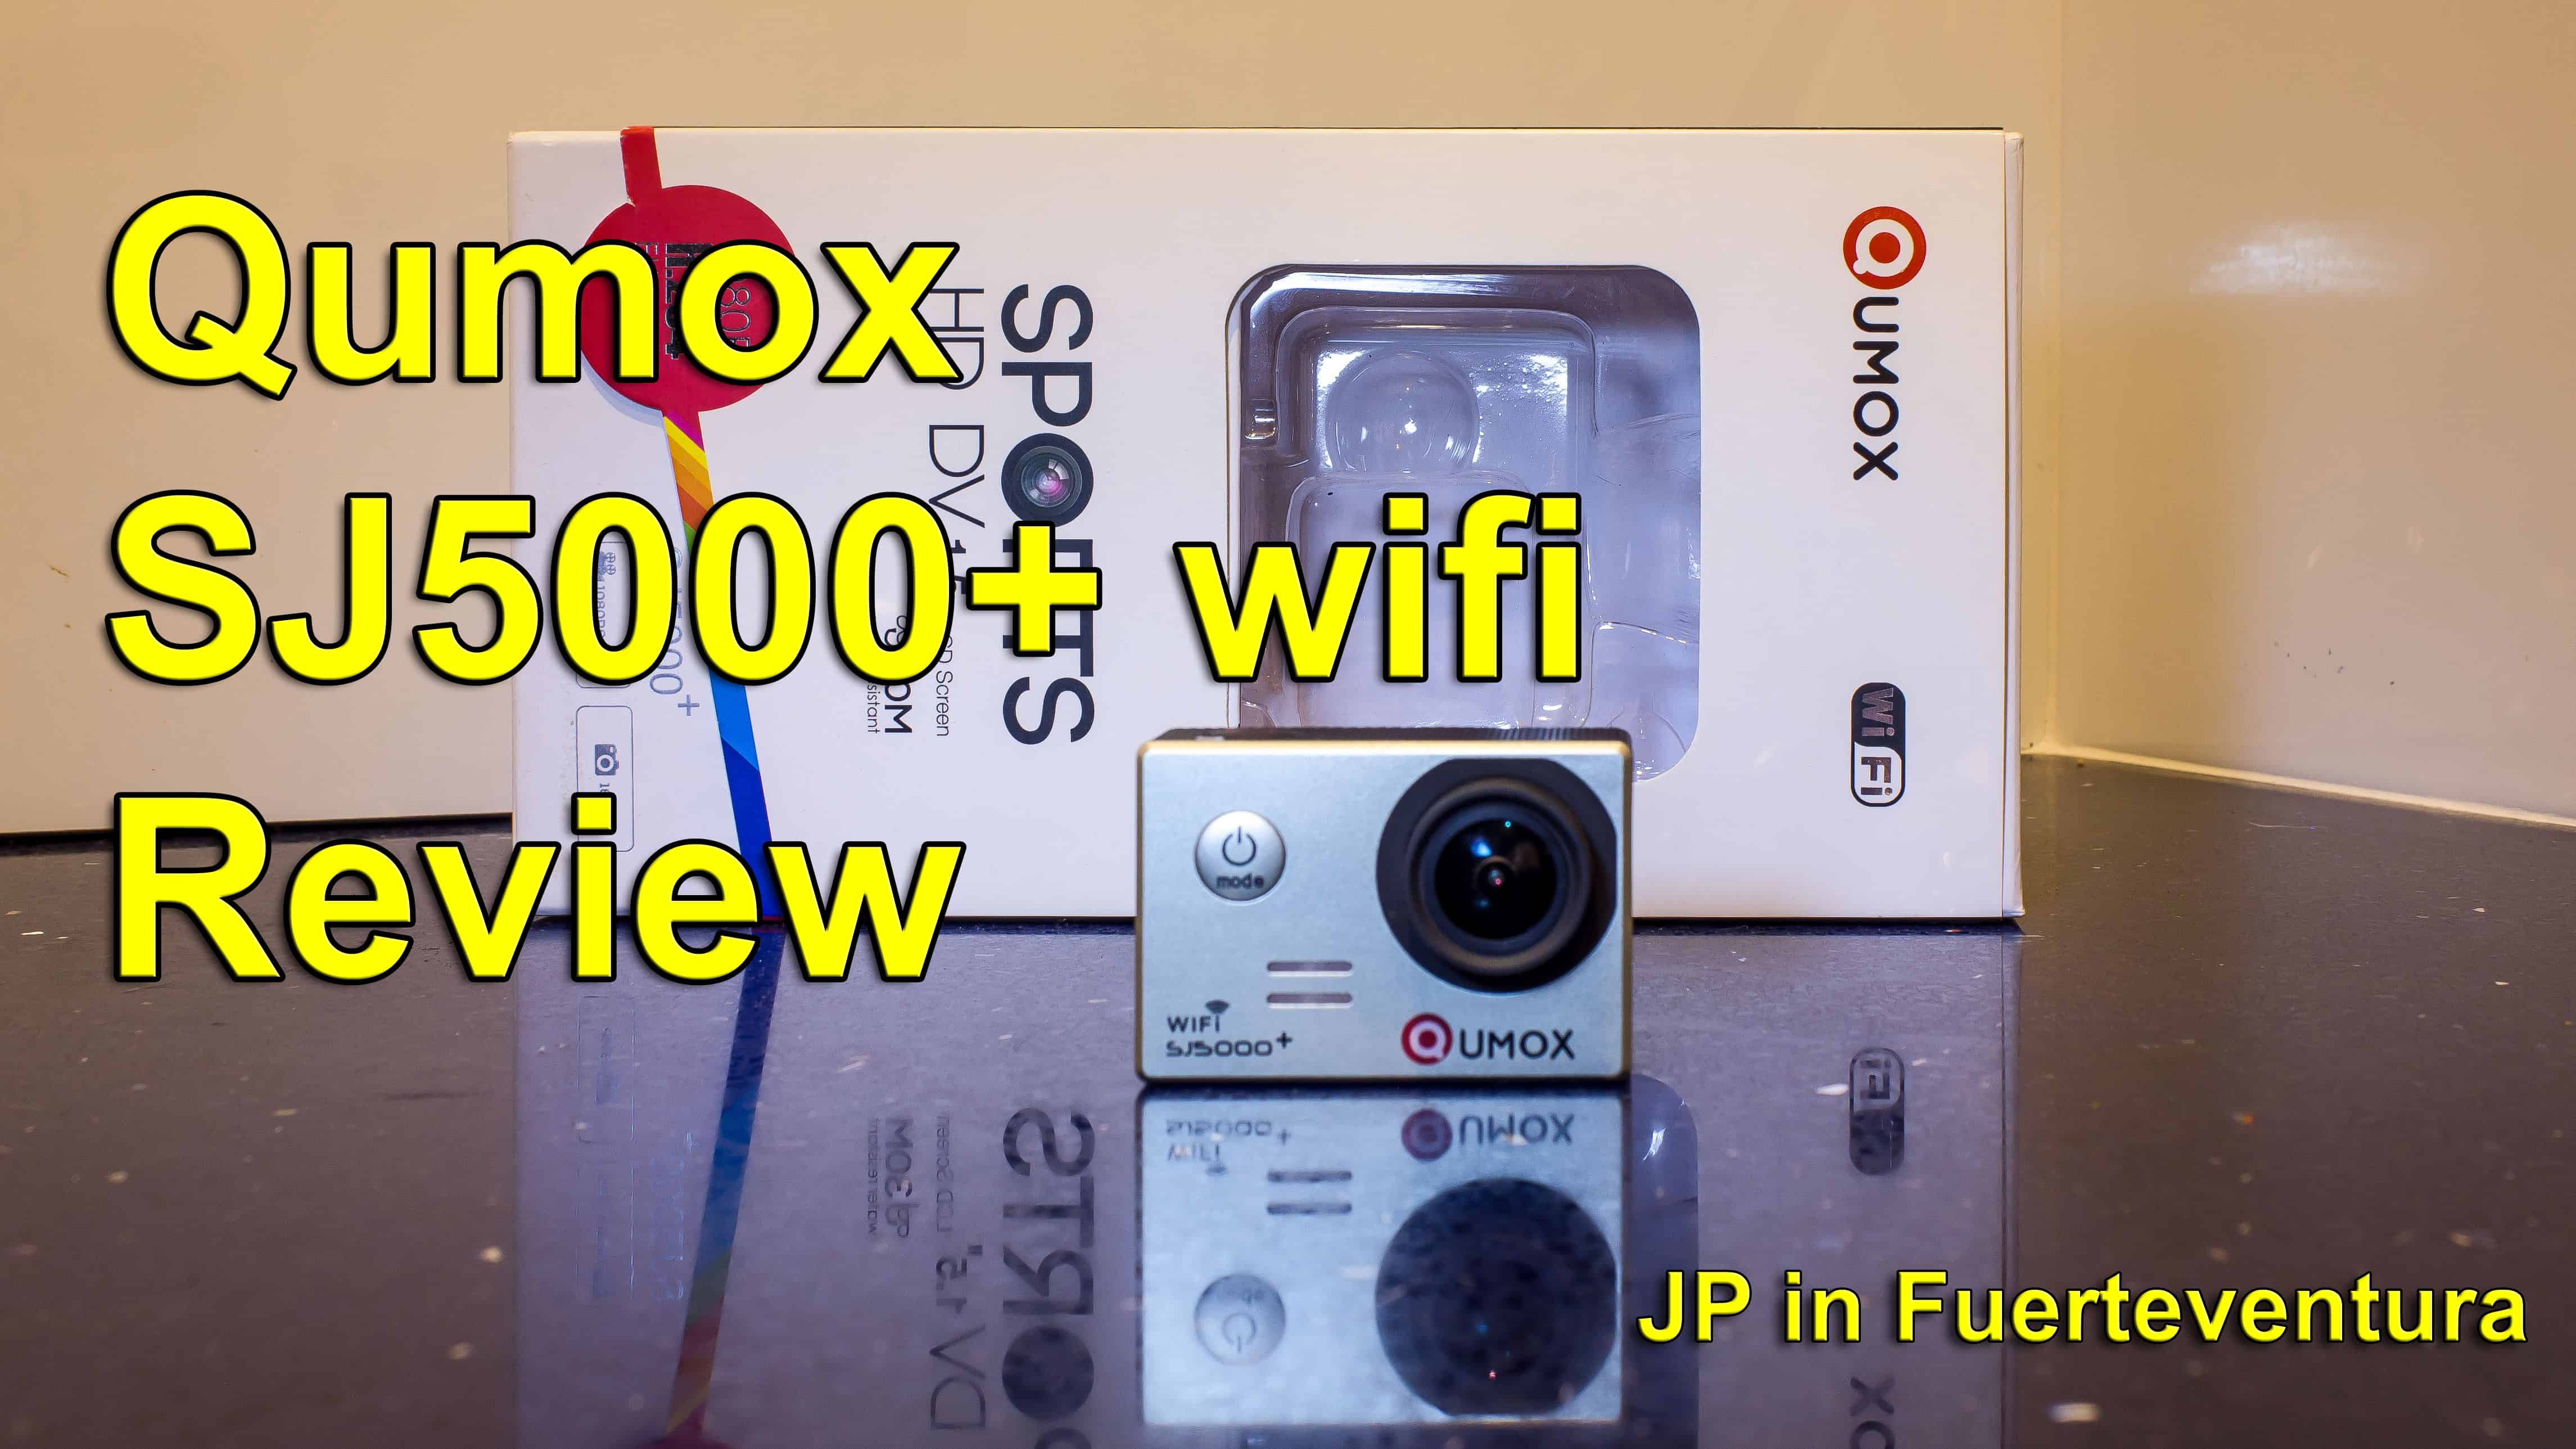 Qumox SJ5000+